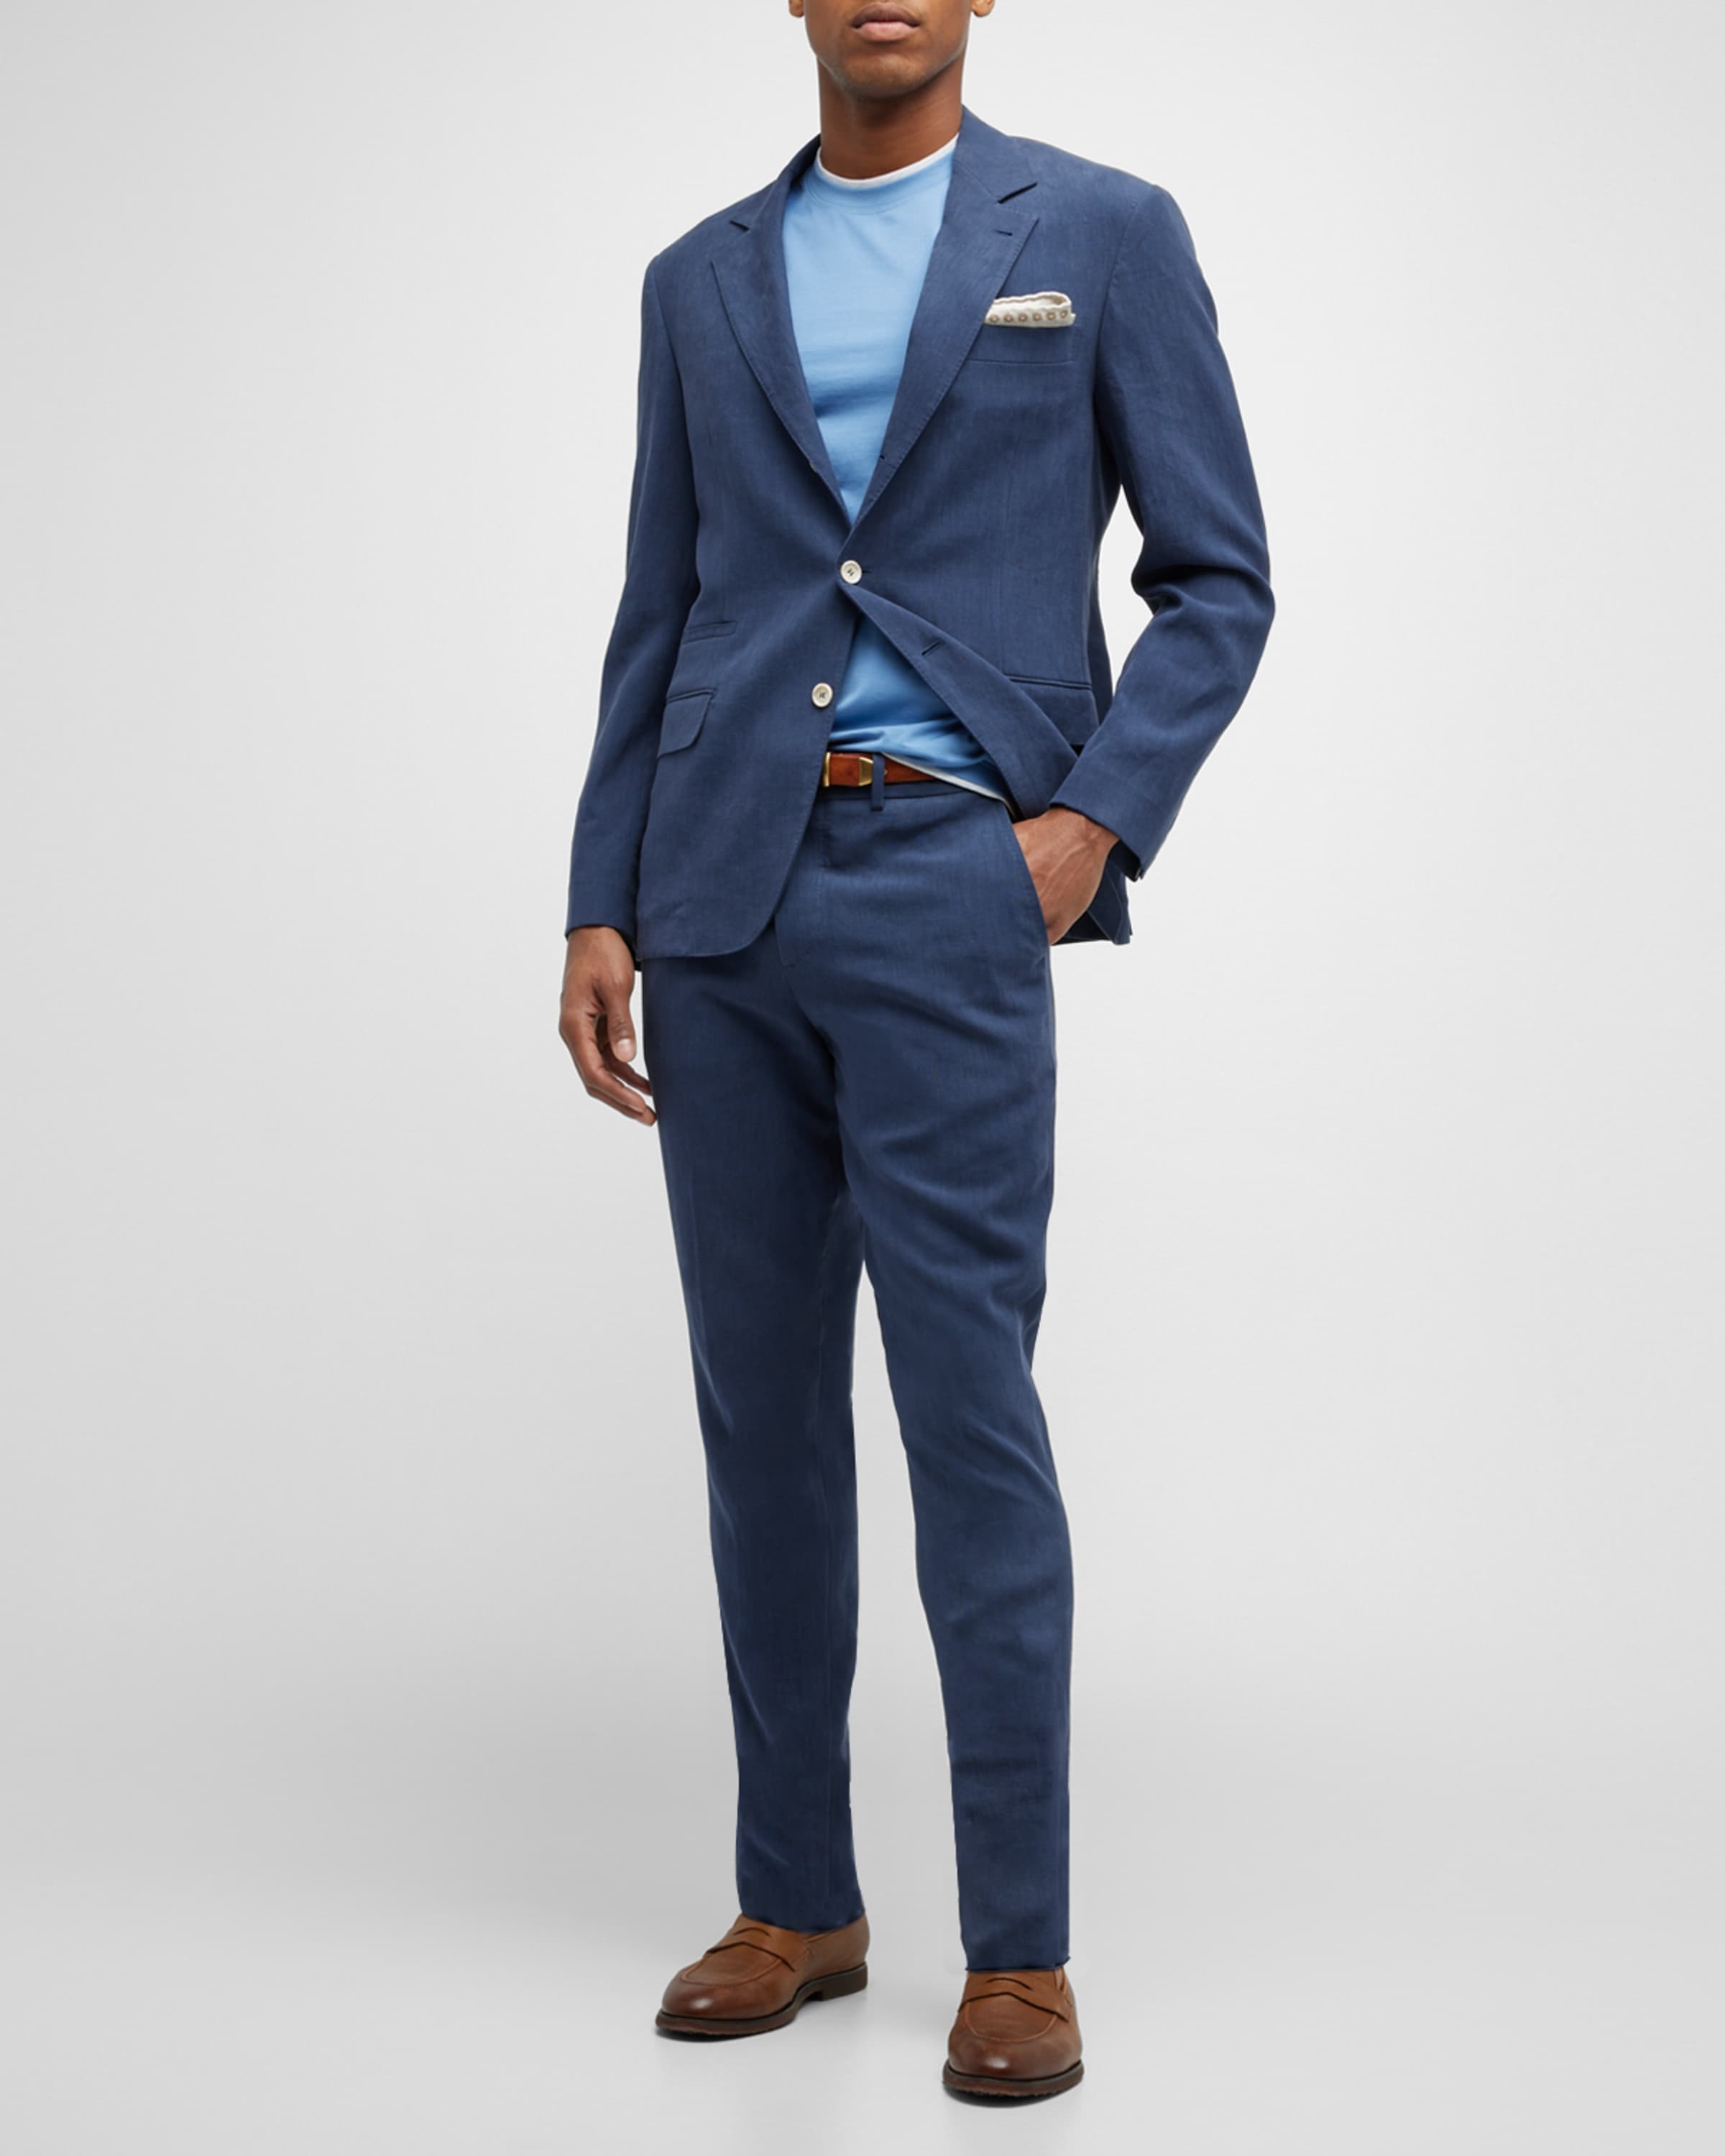 Men's Solid Linen Suit - 2